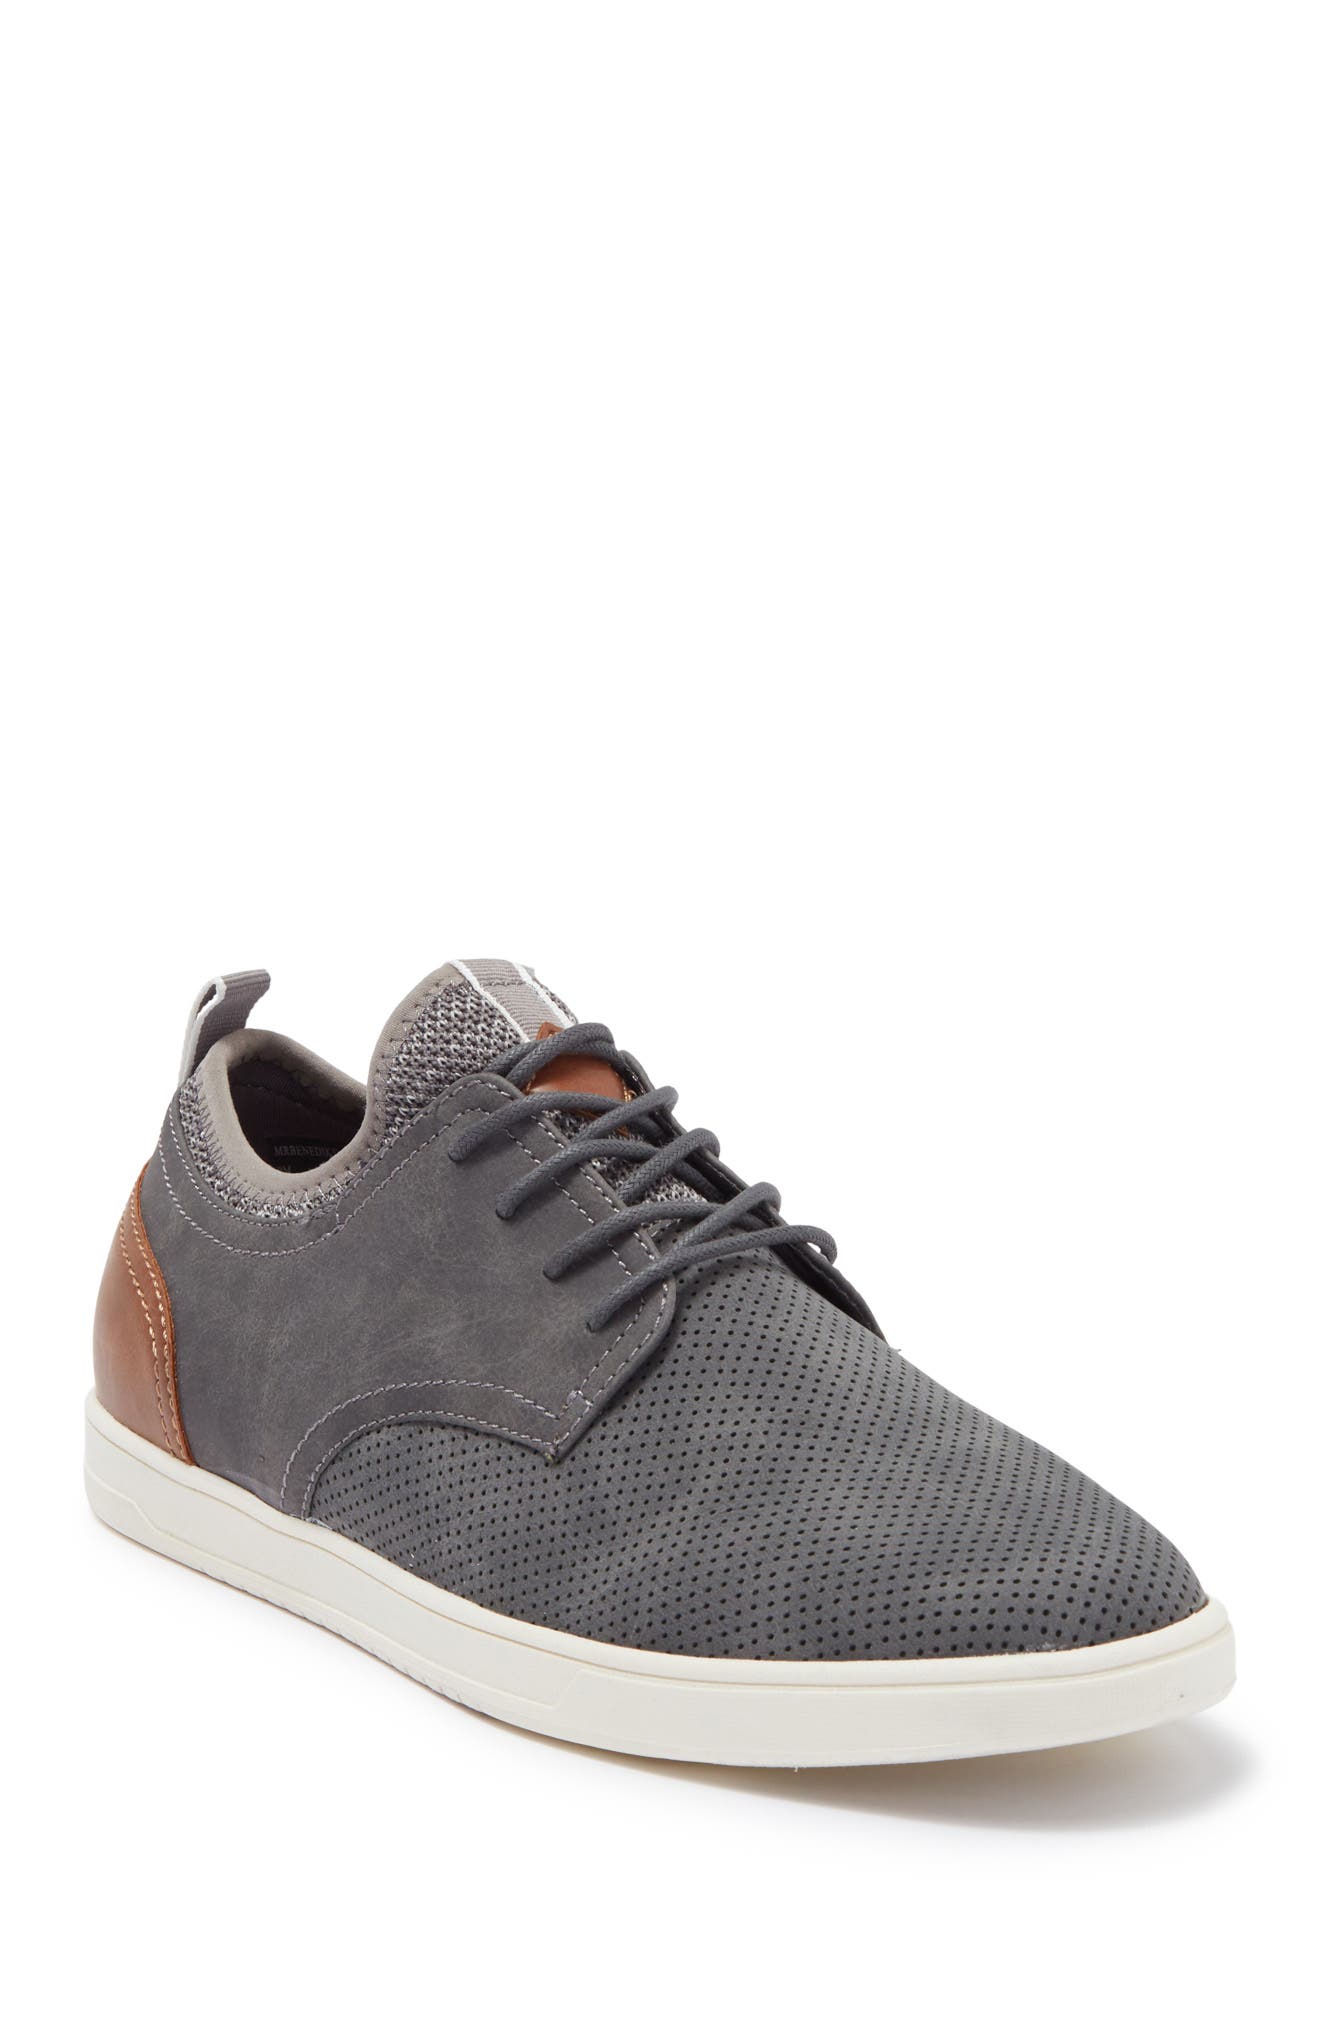 Abound Benedikt Perforated Sneaker In Grey